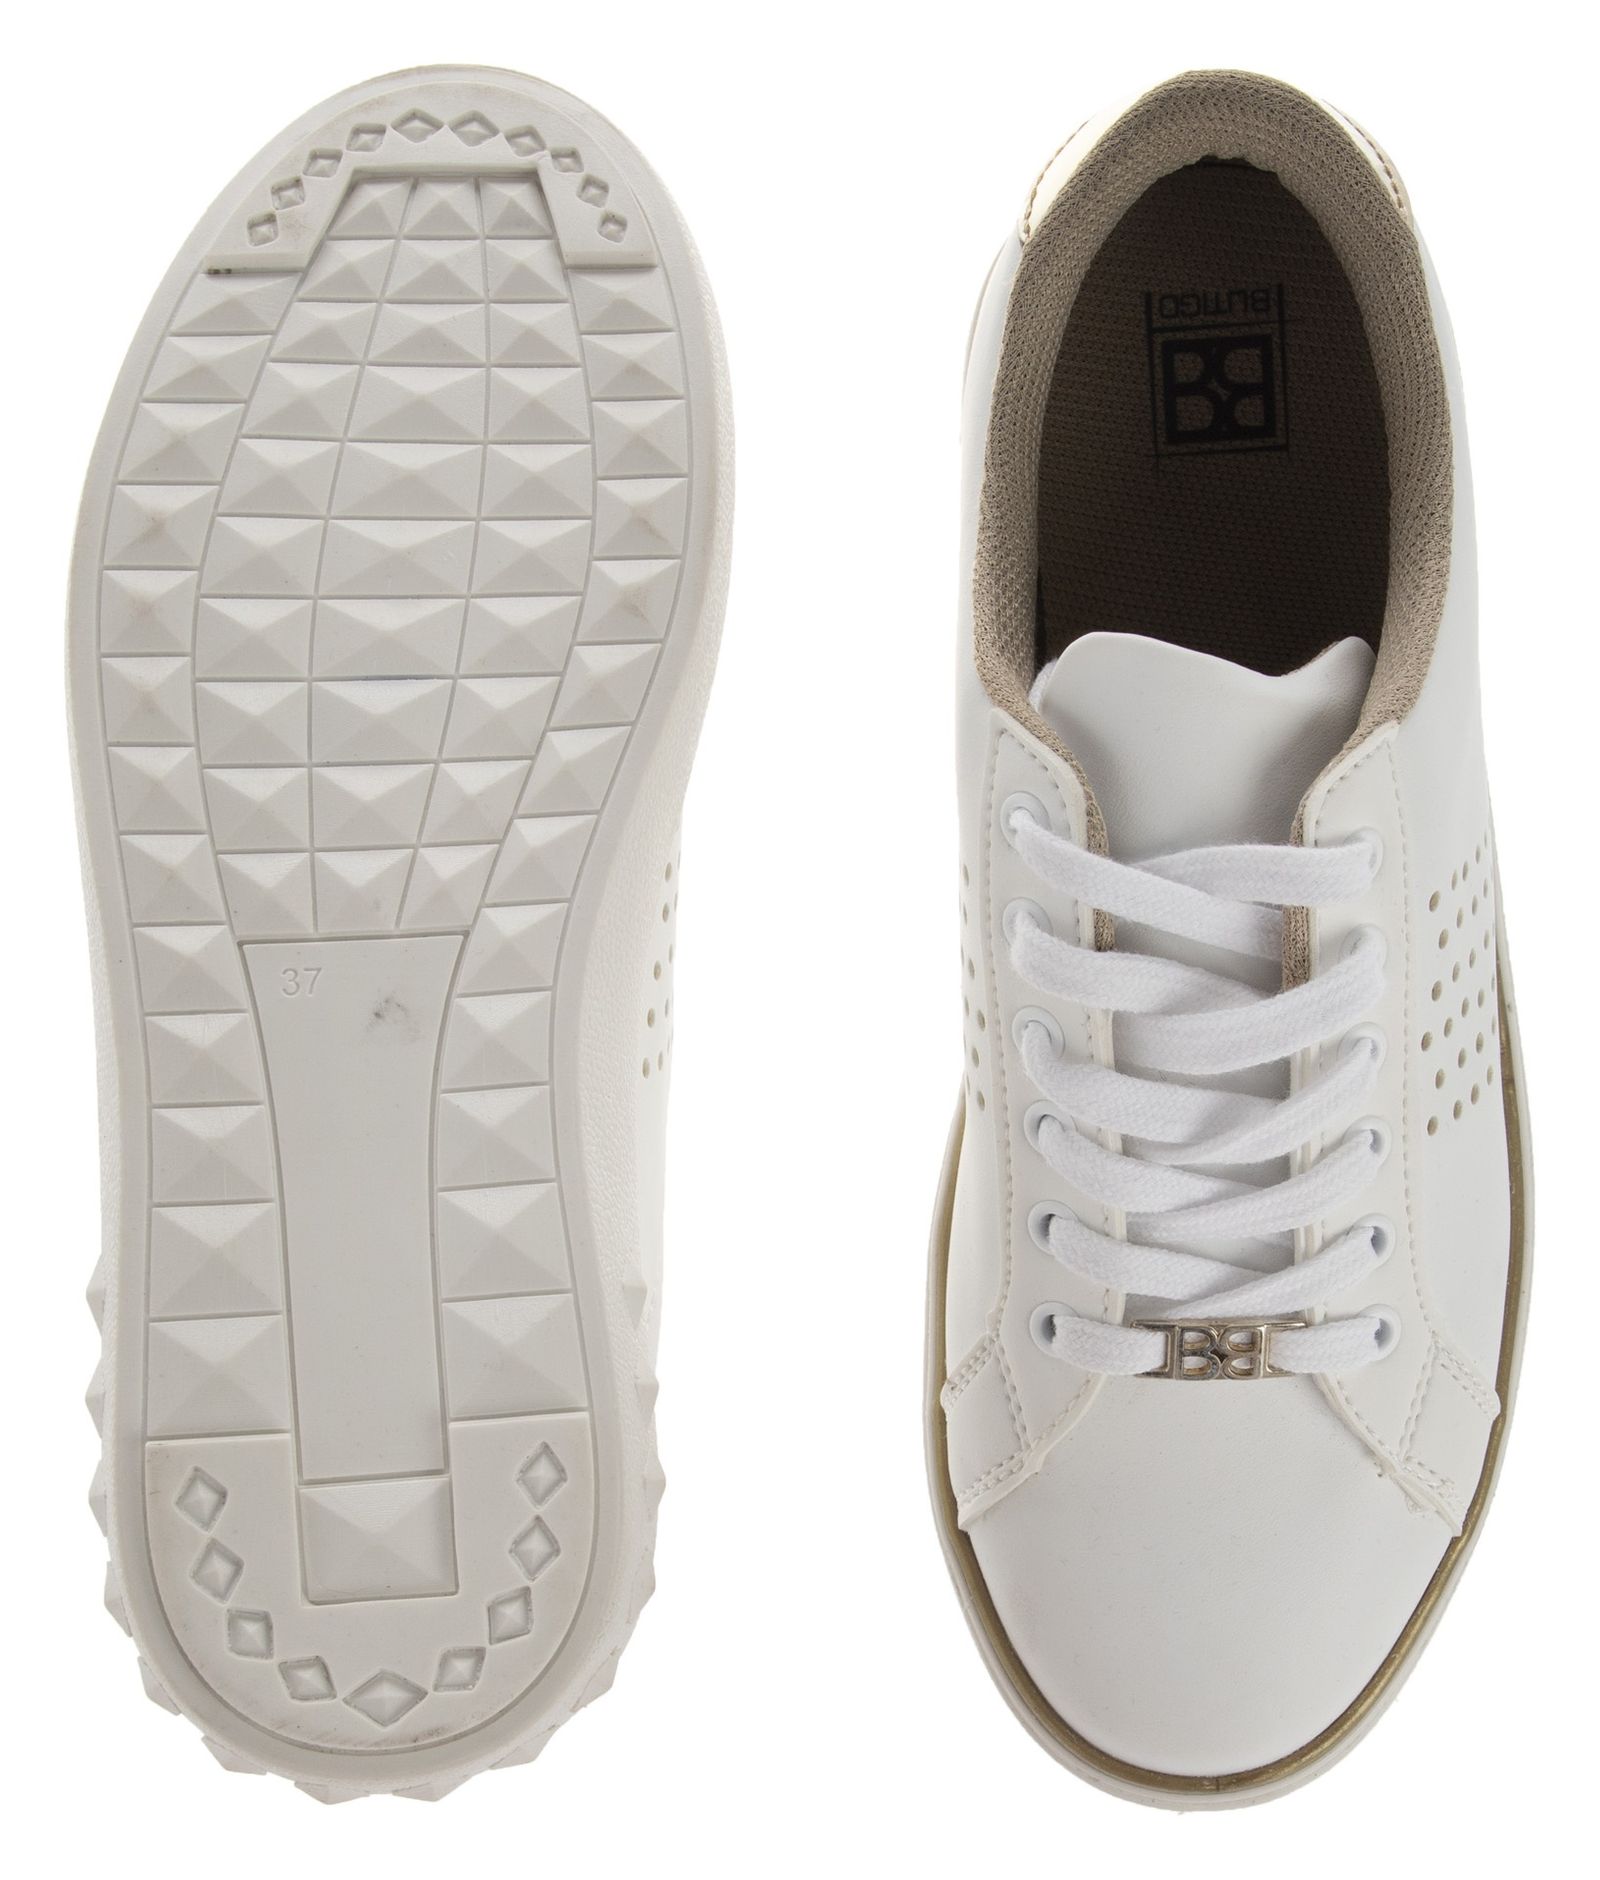 کفش روزمره زنانه بوتیگو مدل 100313941-124 - سفید - 6